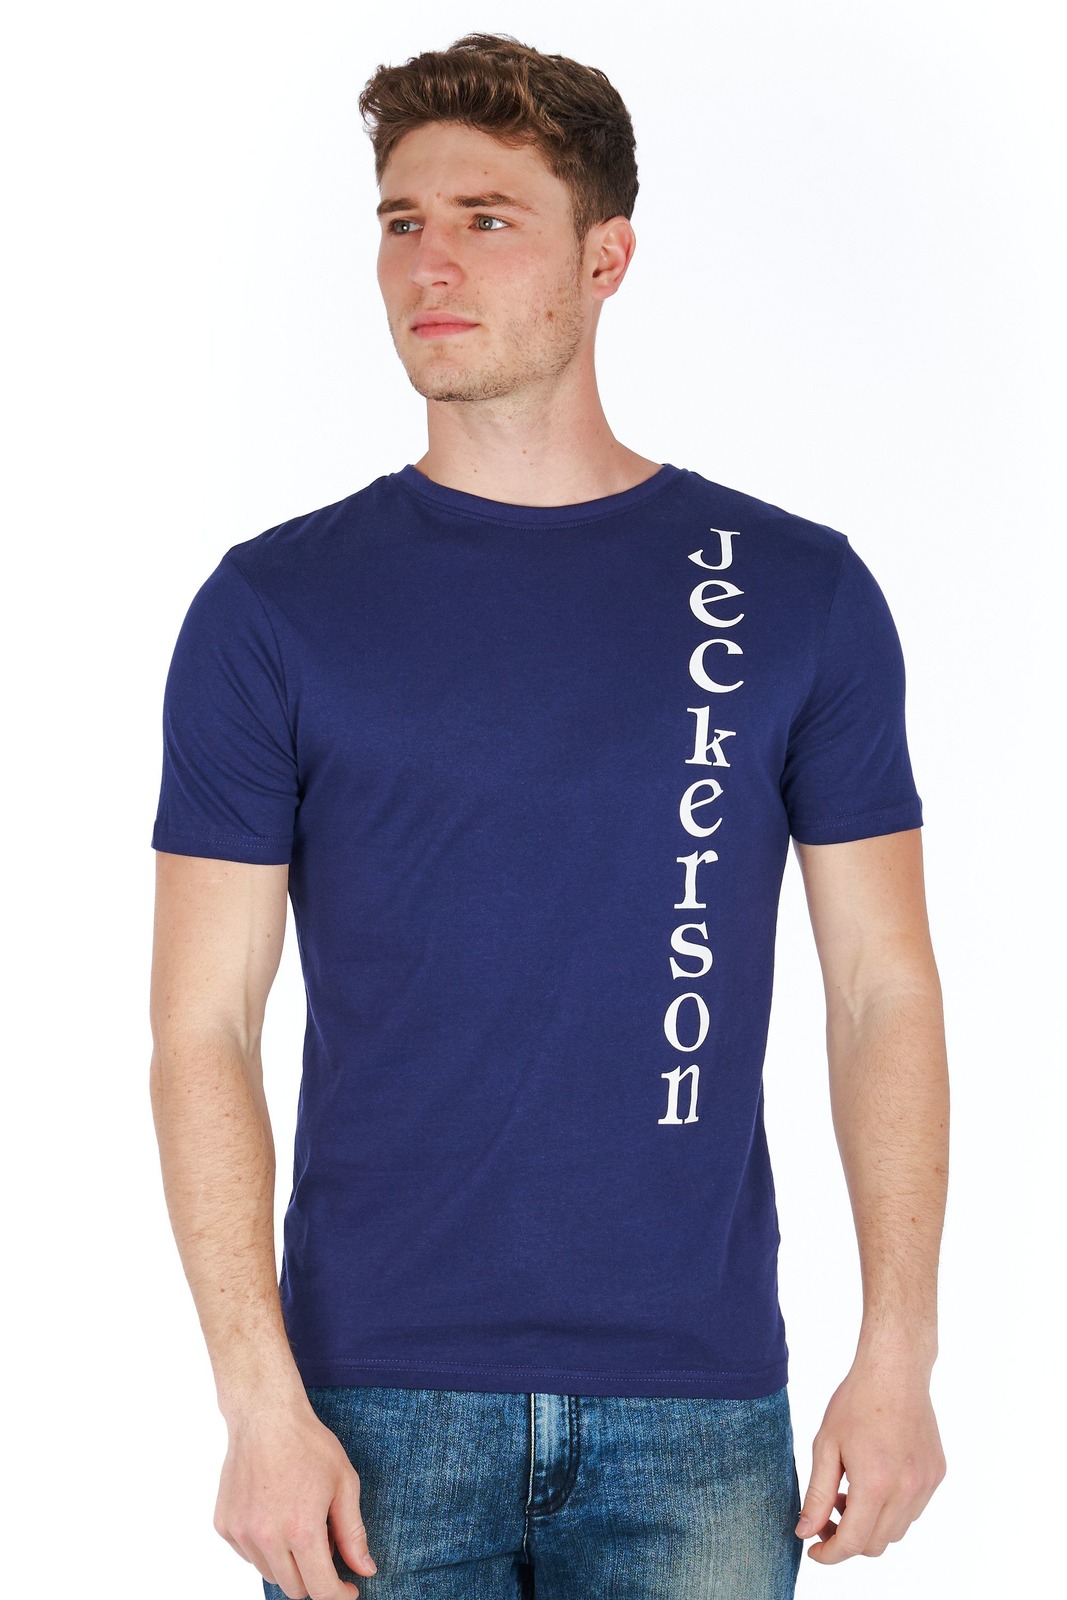 Jeckerson Blue T-shirts for Men - LOGO